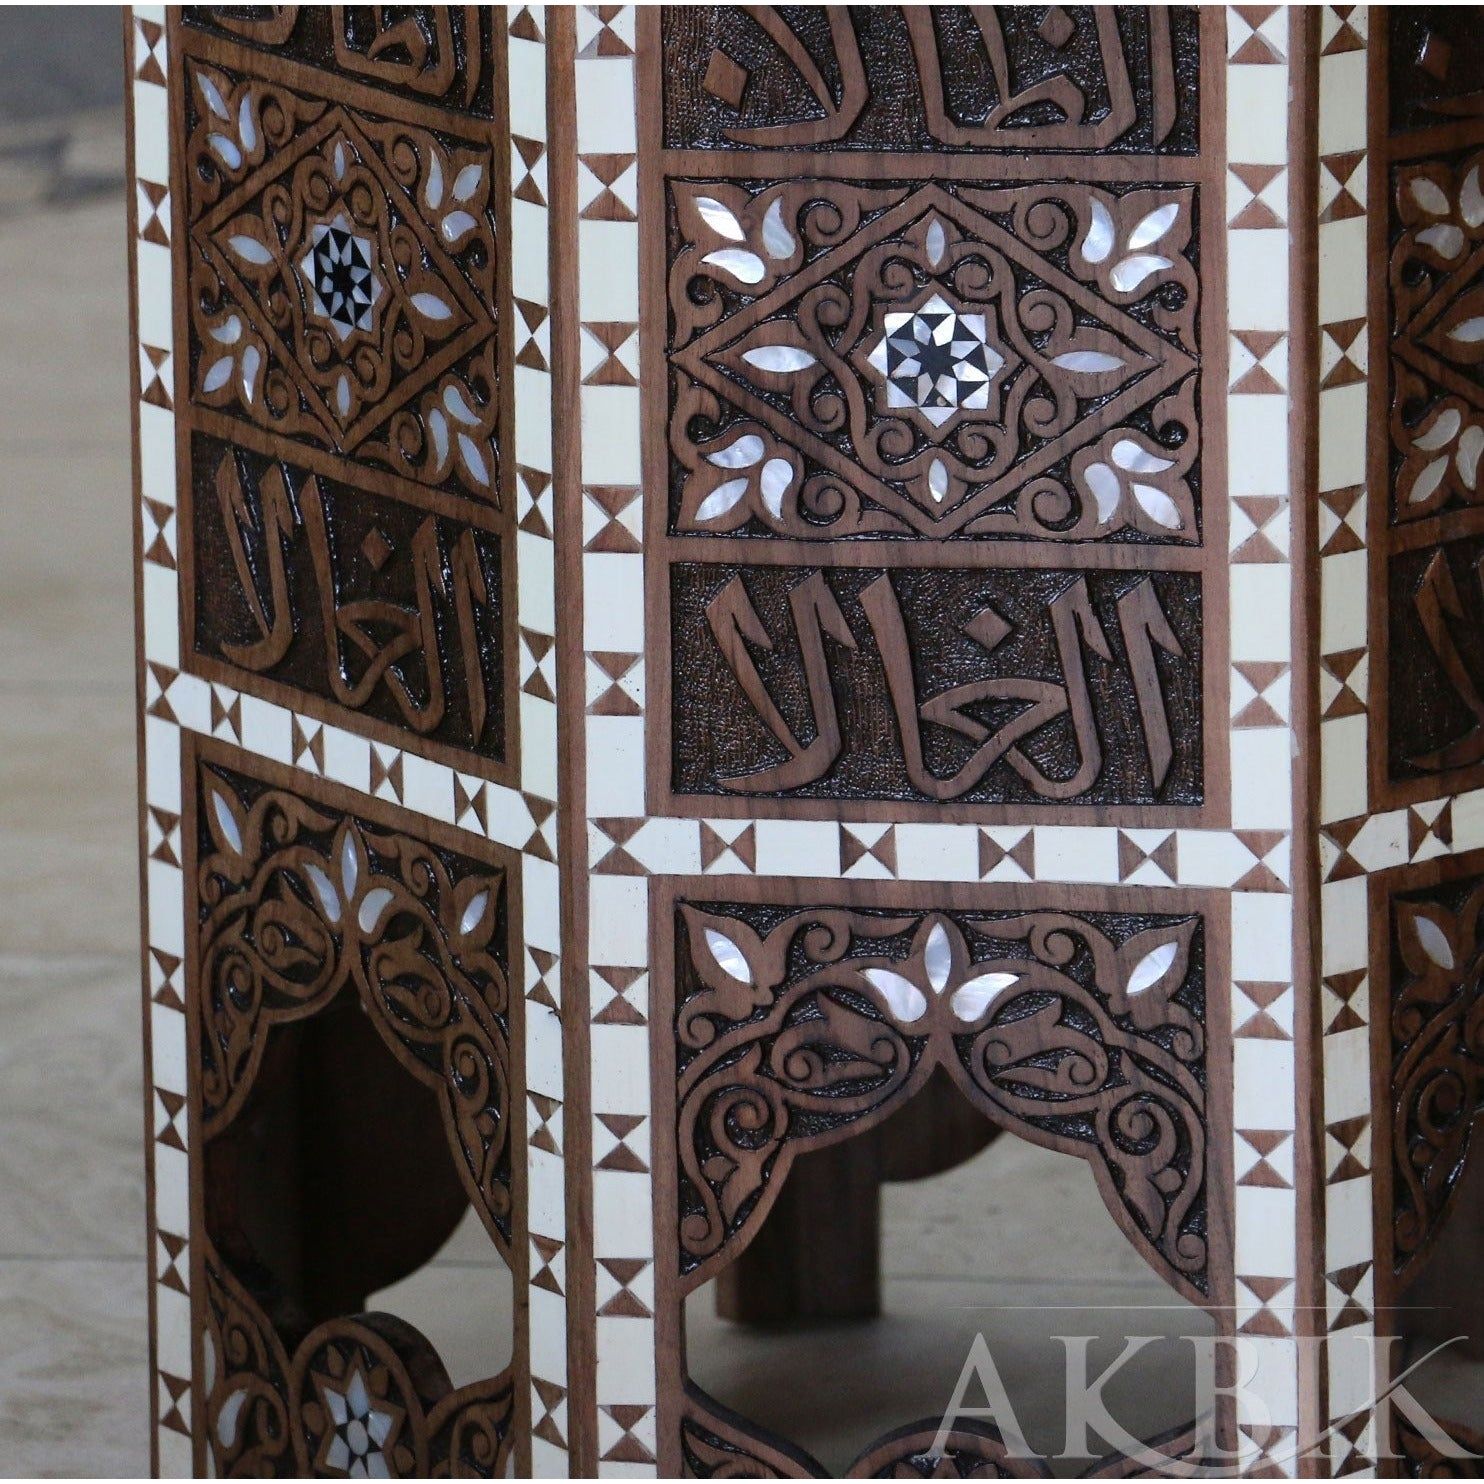 ARABIAN DREAM SIDE TABLE - AKBIK Furniture & Design